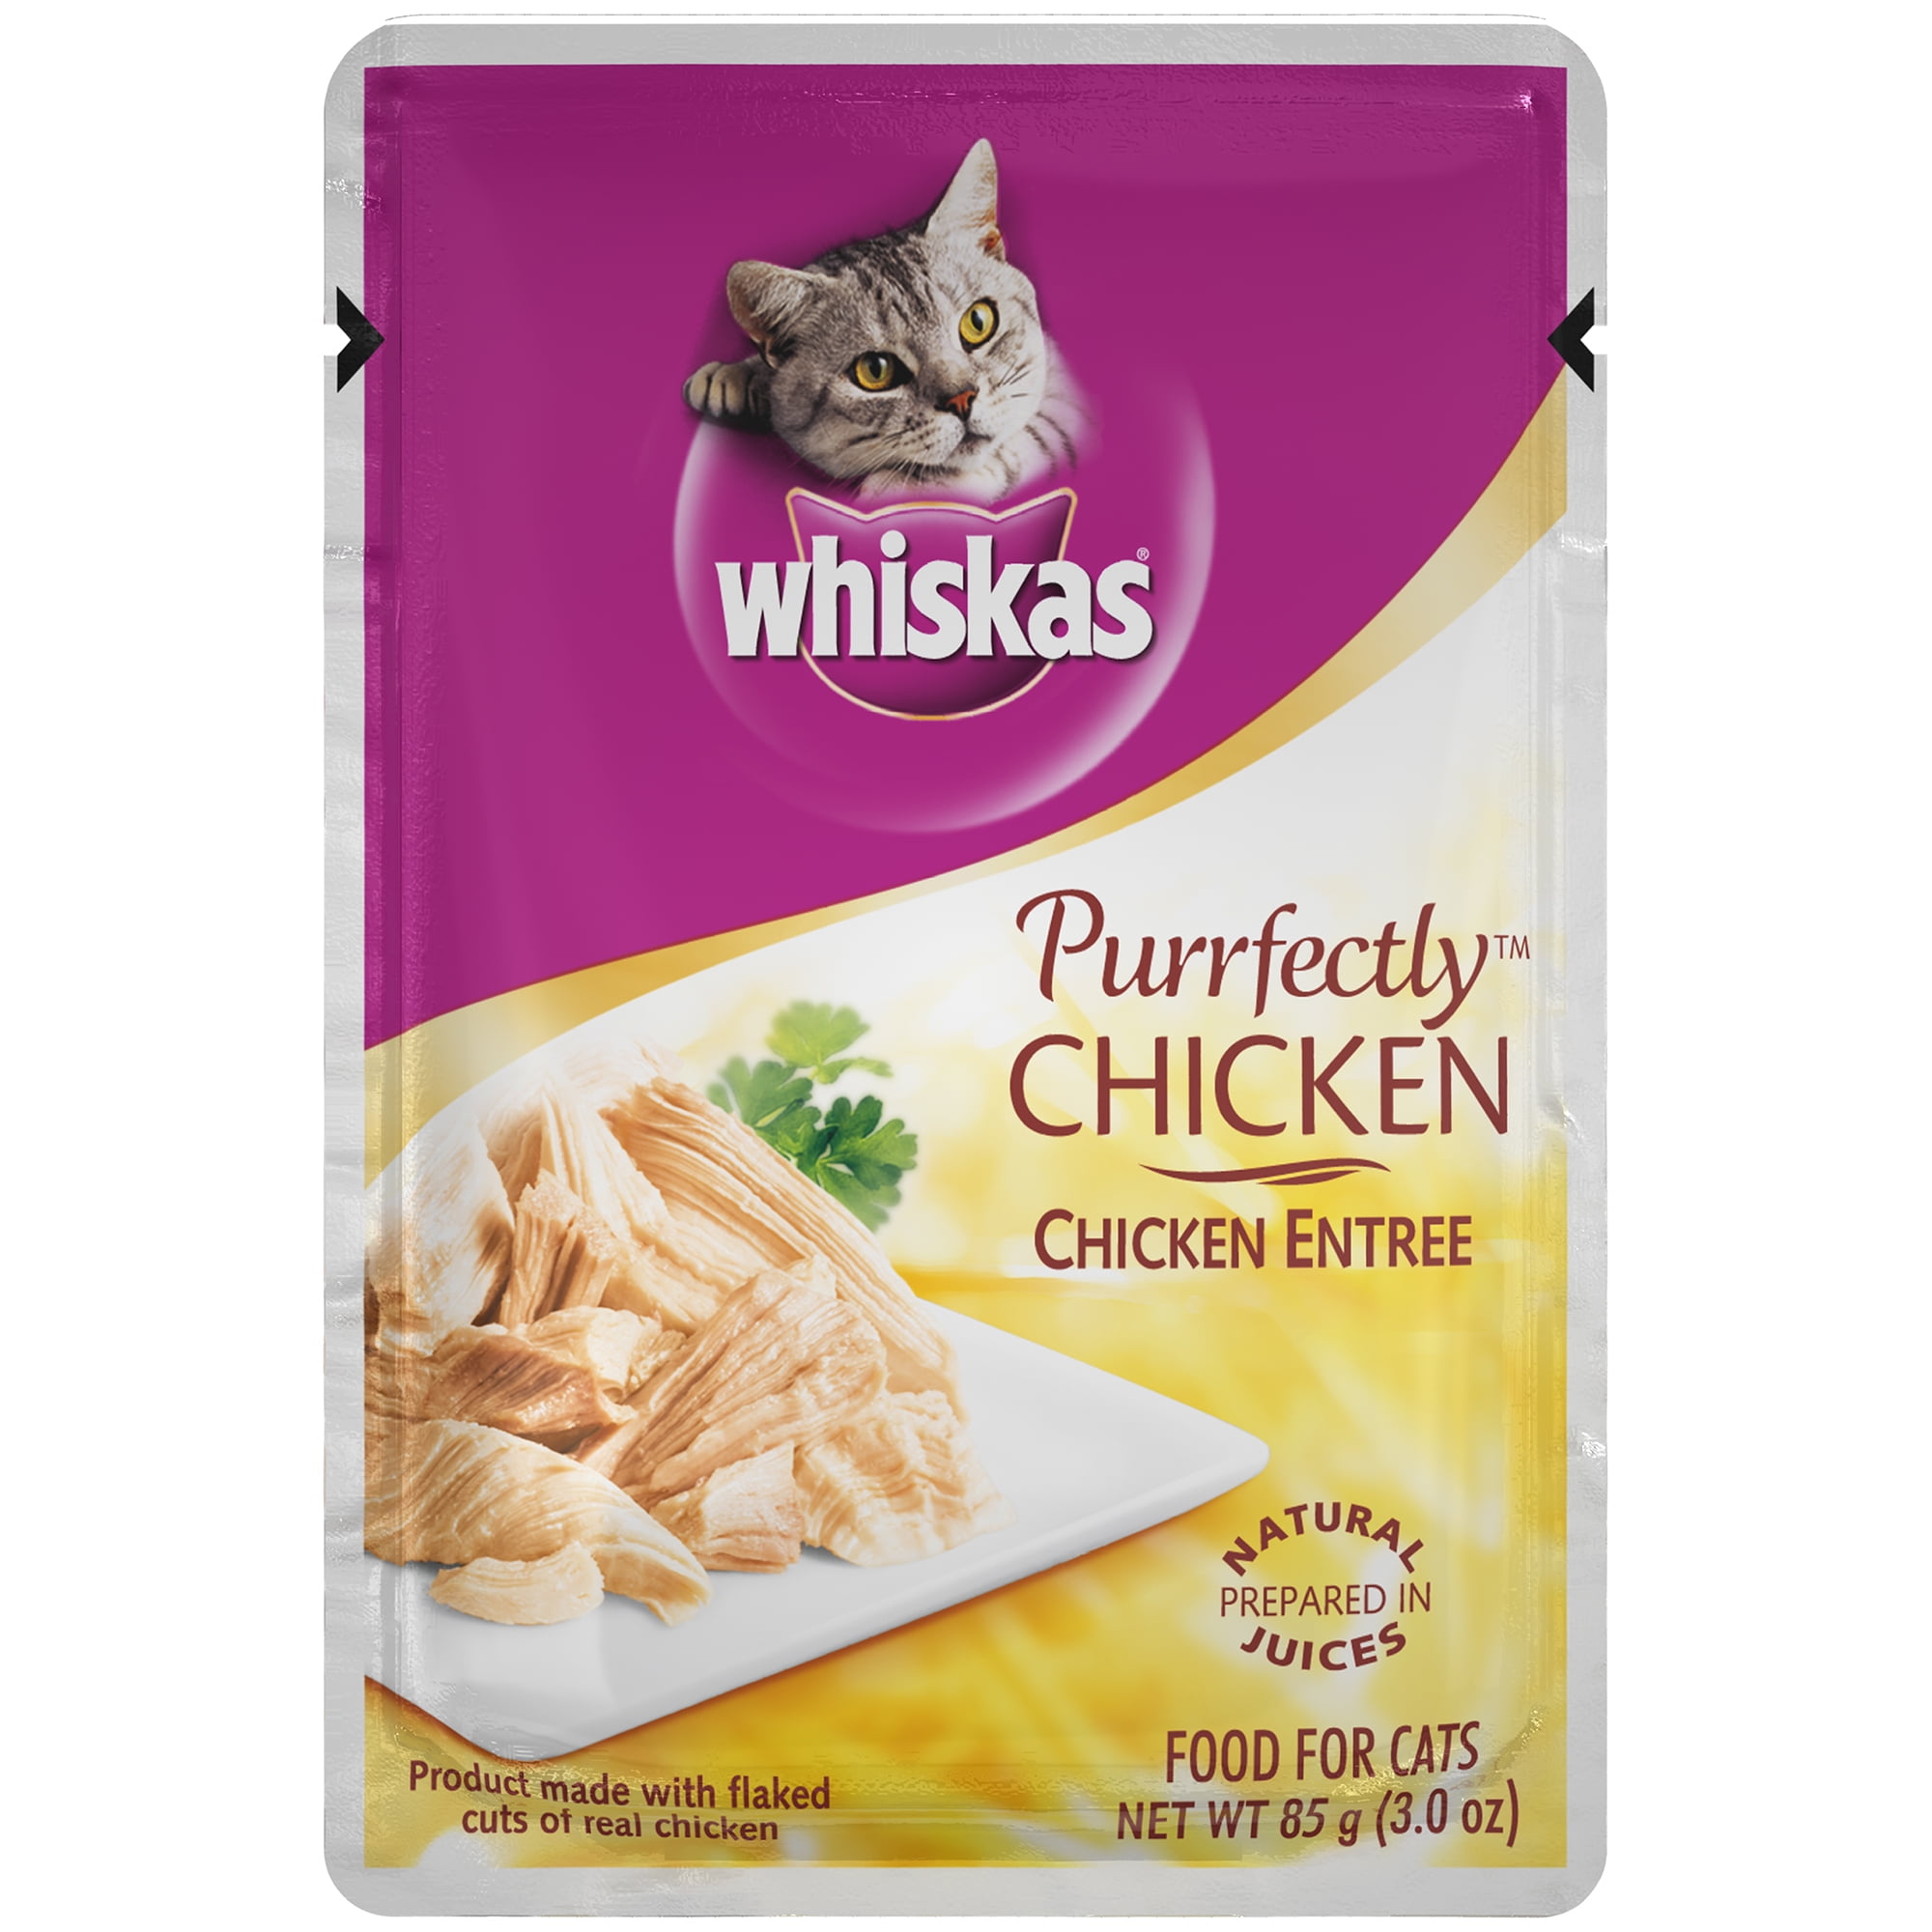 whiskas cat food checkers